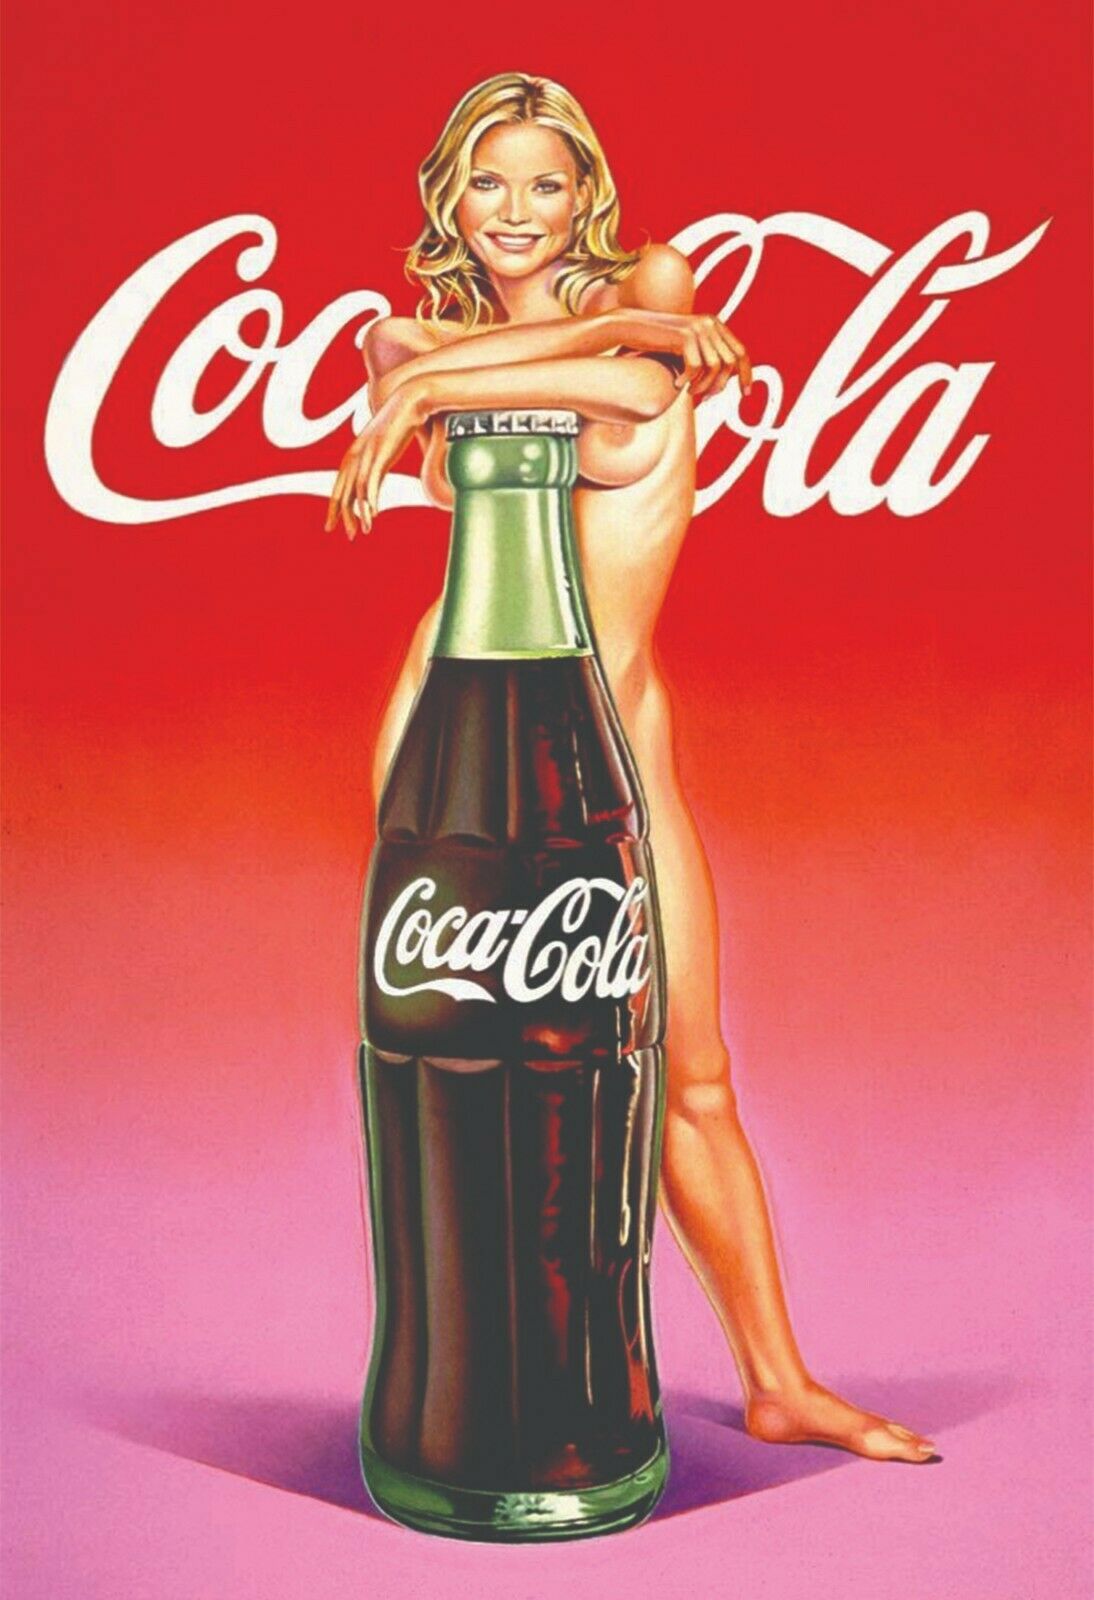 Coca Cola Pepsi Vintage Soft Drink Ads reprint 8.50 x 11 inches photo 134 